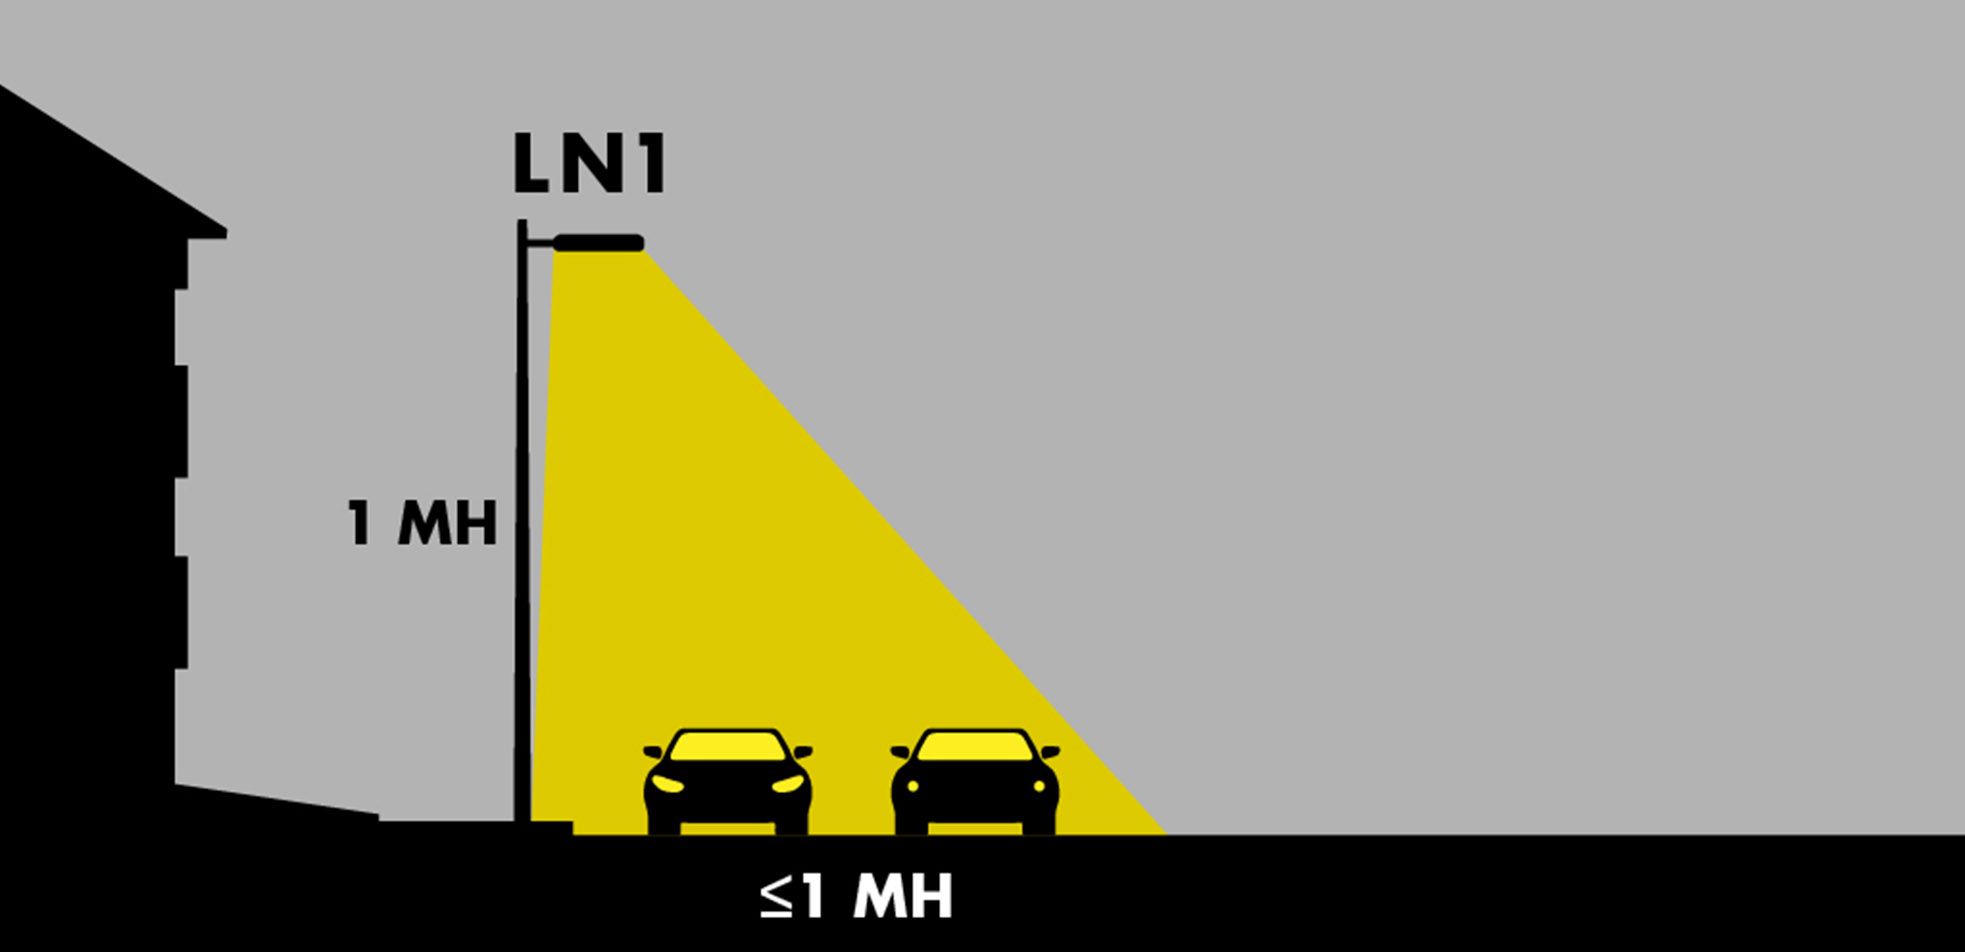 strada-2x2-ln1